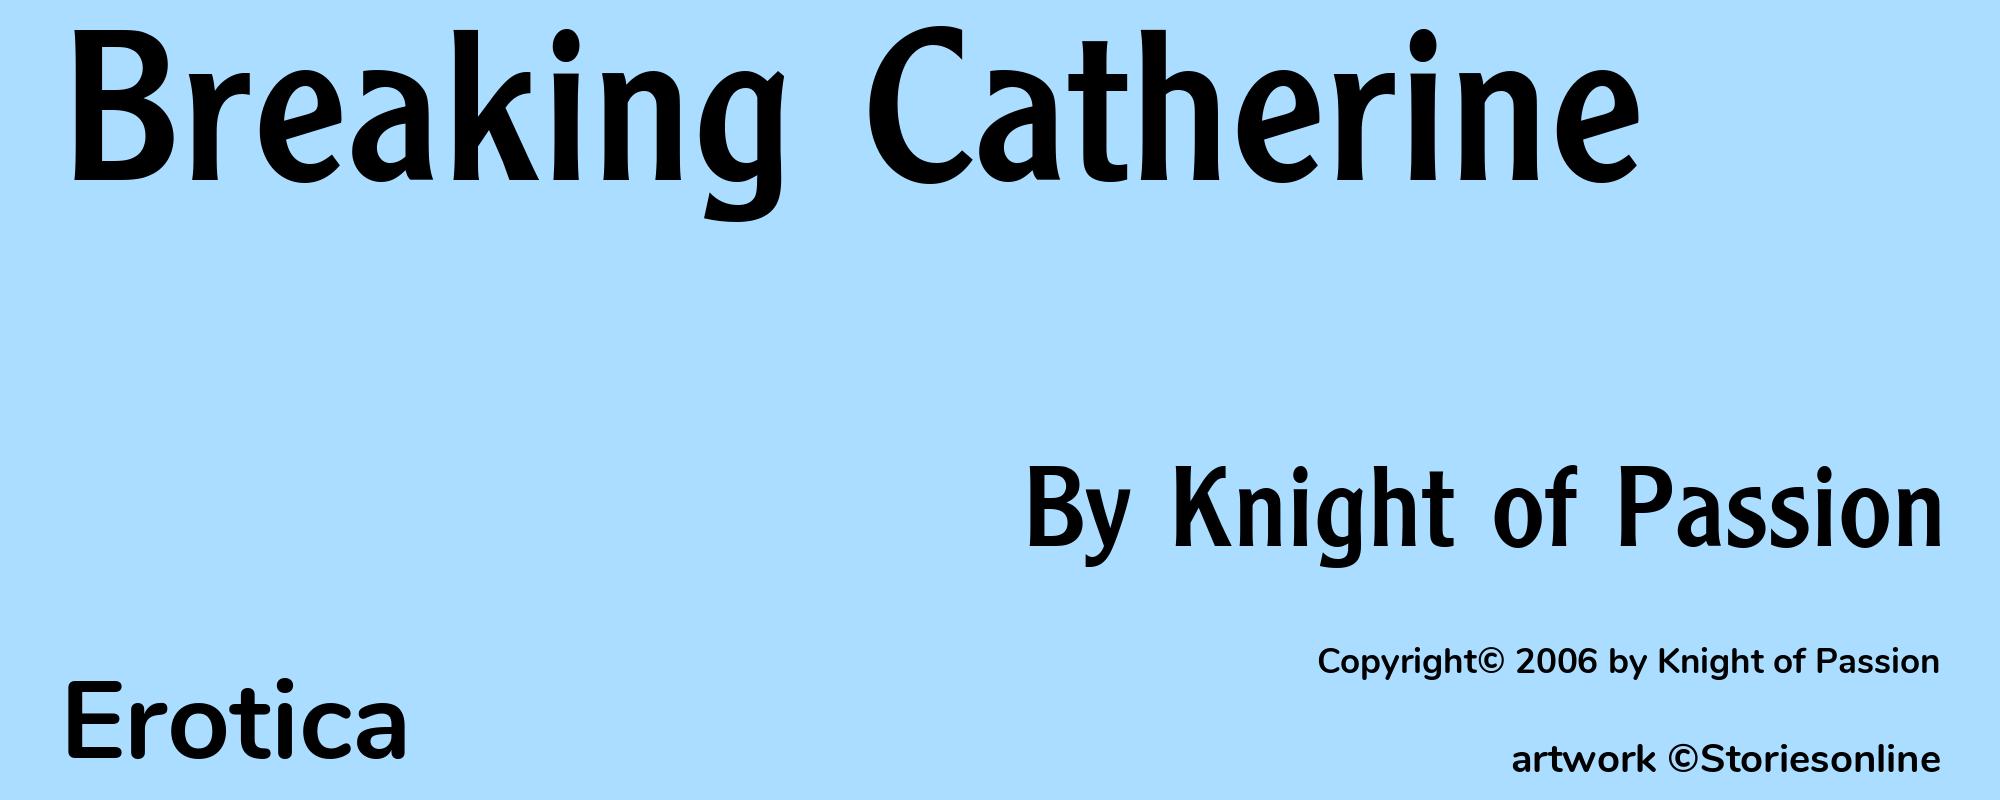 Breaking Catherine - Cover